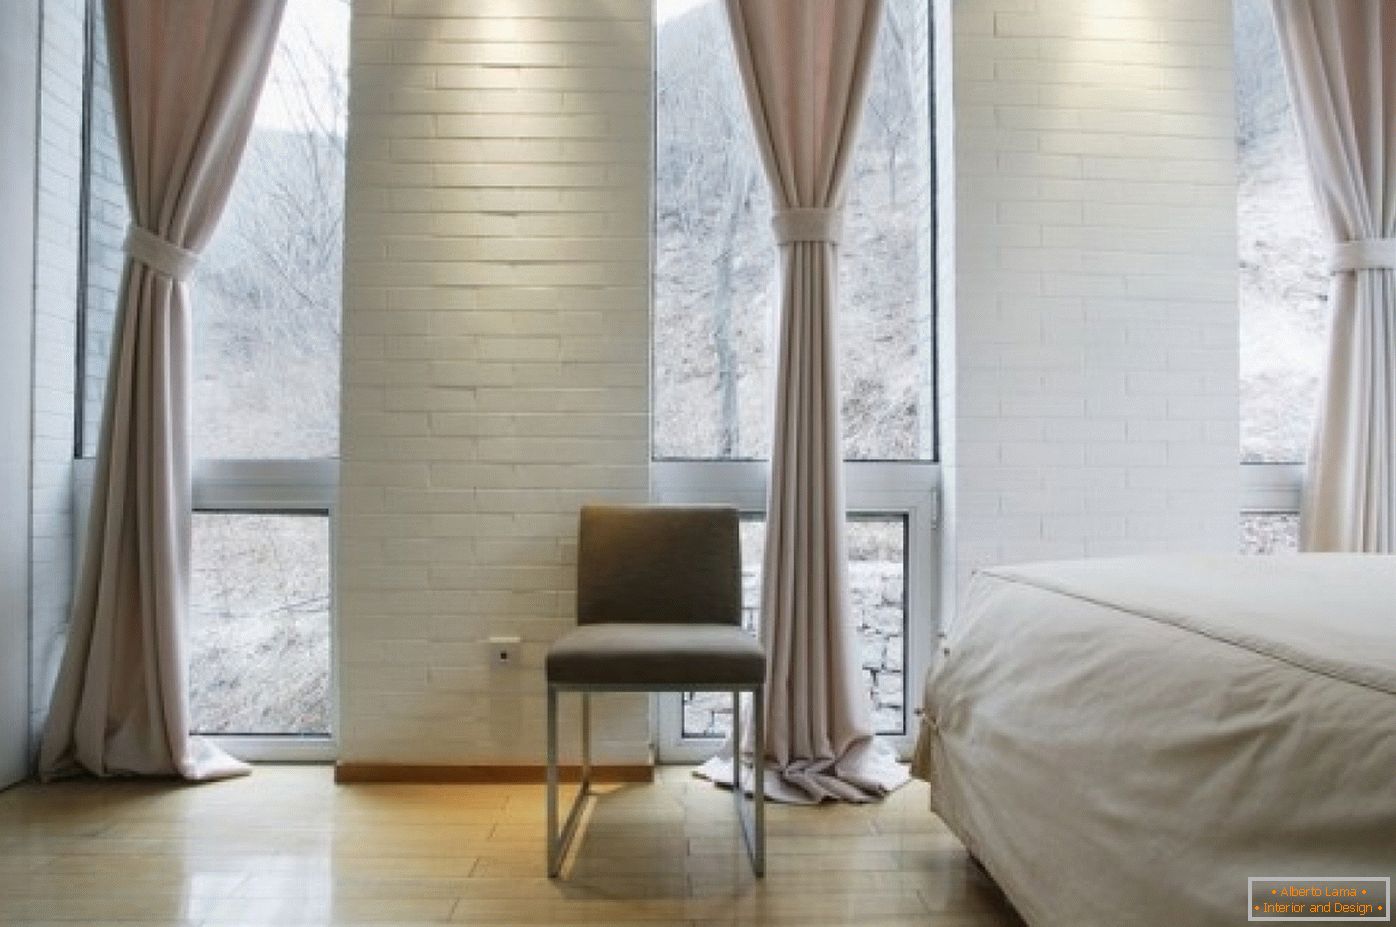 Bedroom design in white colors